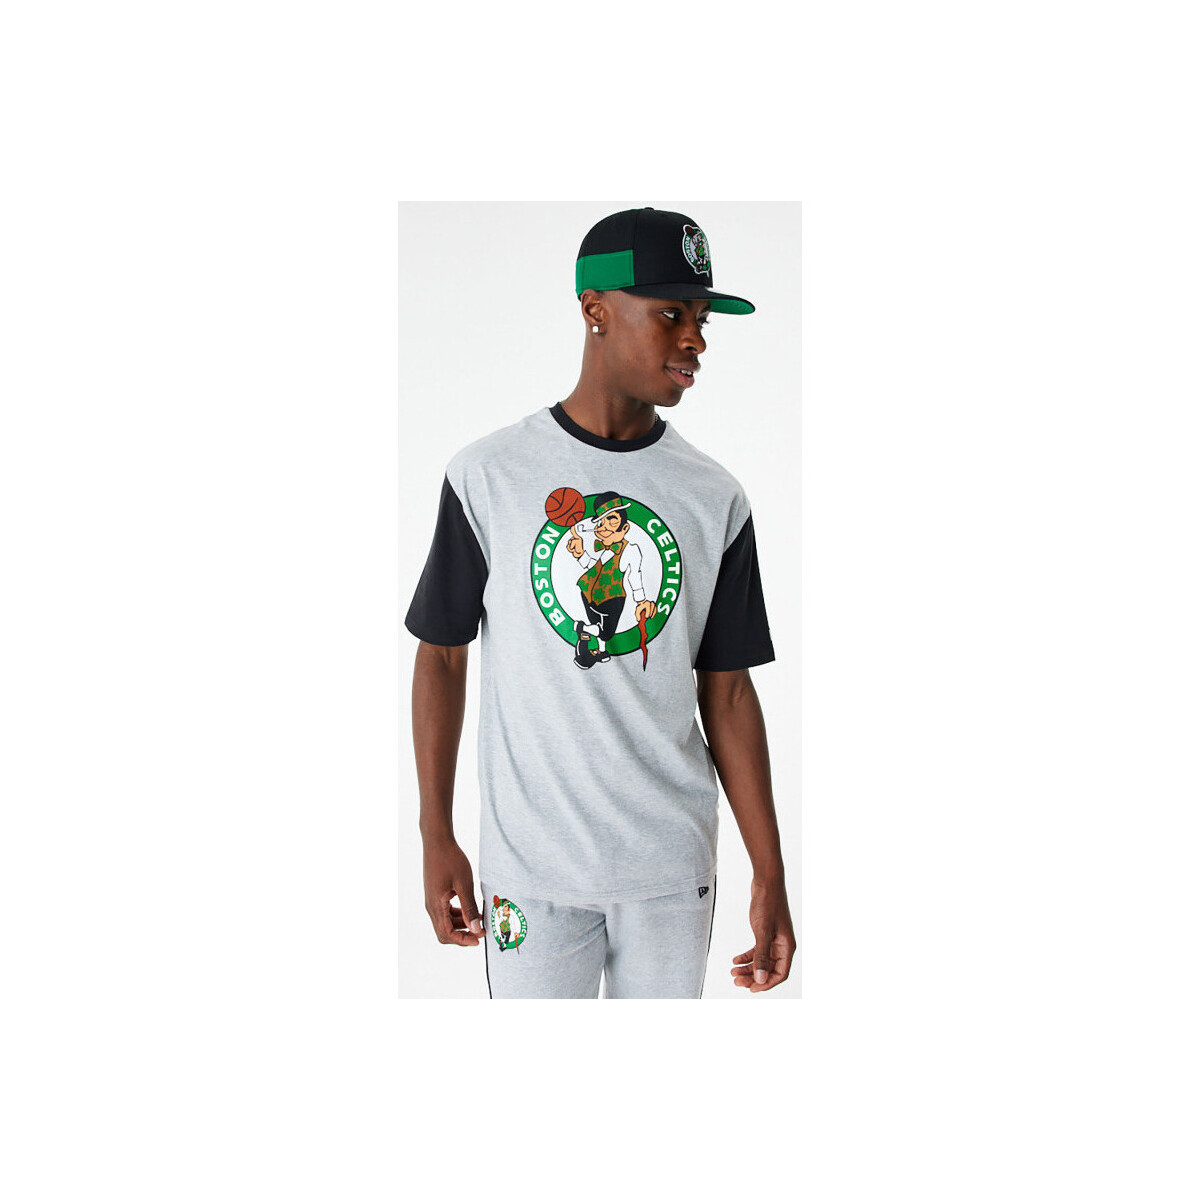 New-Era Multicolore T-Shirt NBA Boston Celtics New gQSzwYda